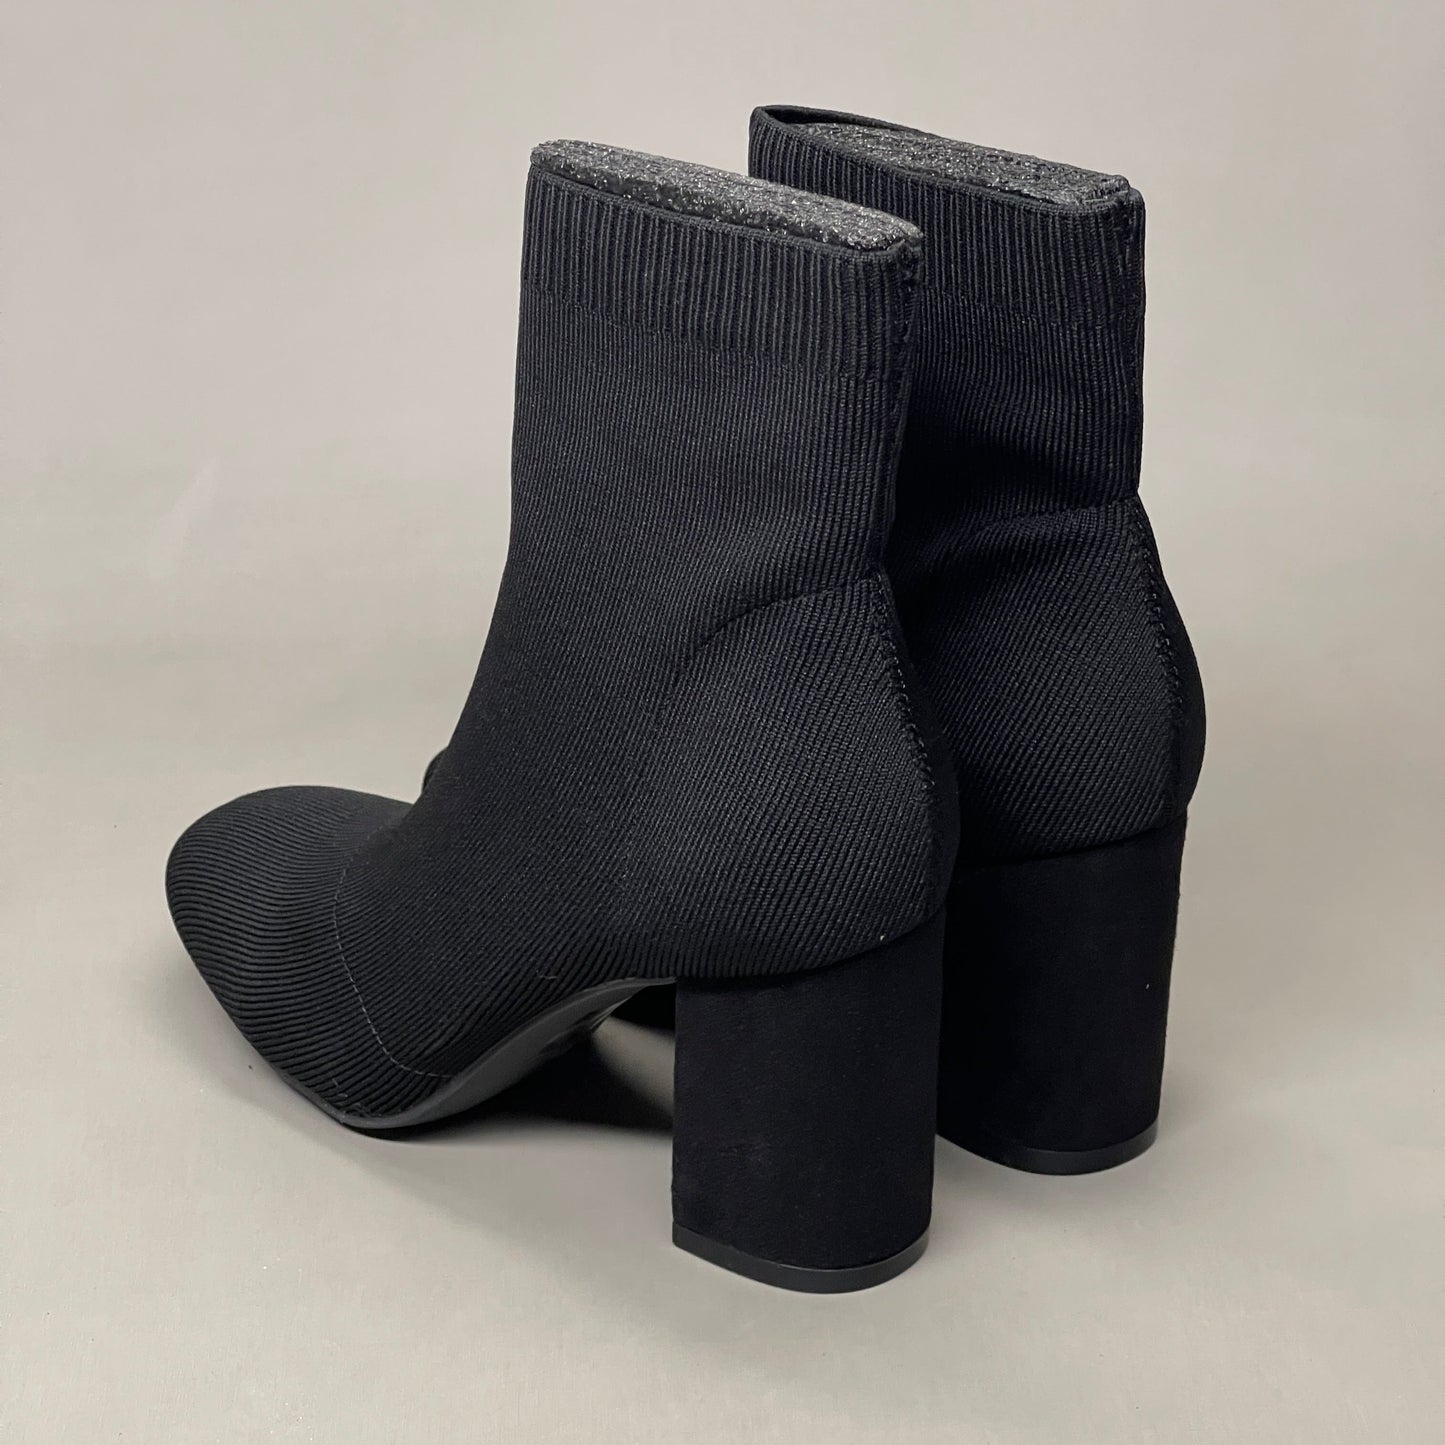 MIA Erika Fly Knit Booties Dress Boots Black 2” Heel Sz 8 GS7553115Y (New)